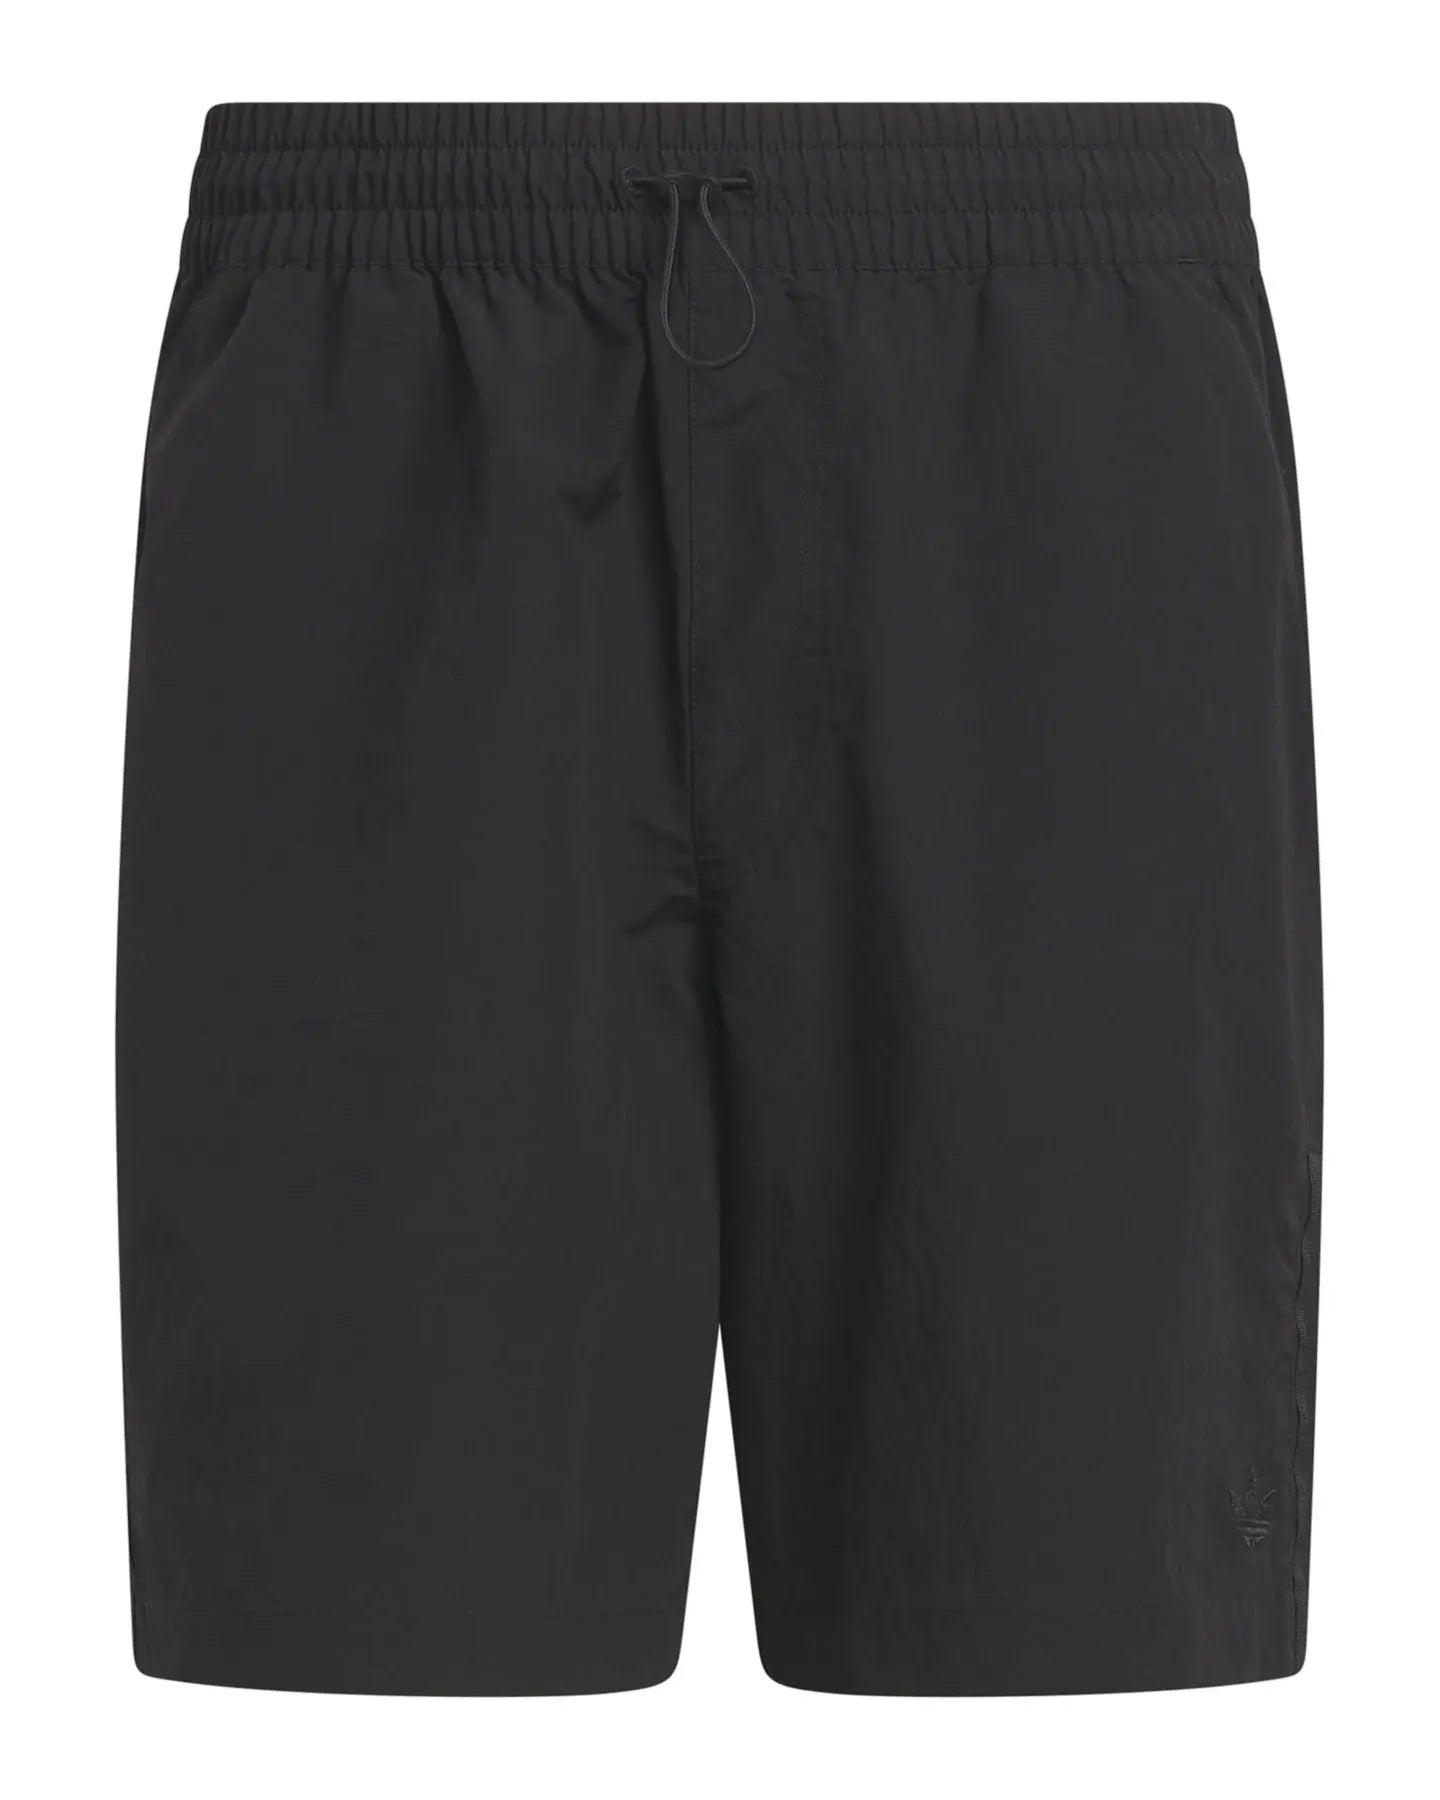 Adidas Water Short - Black / Black Shorts